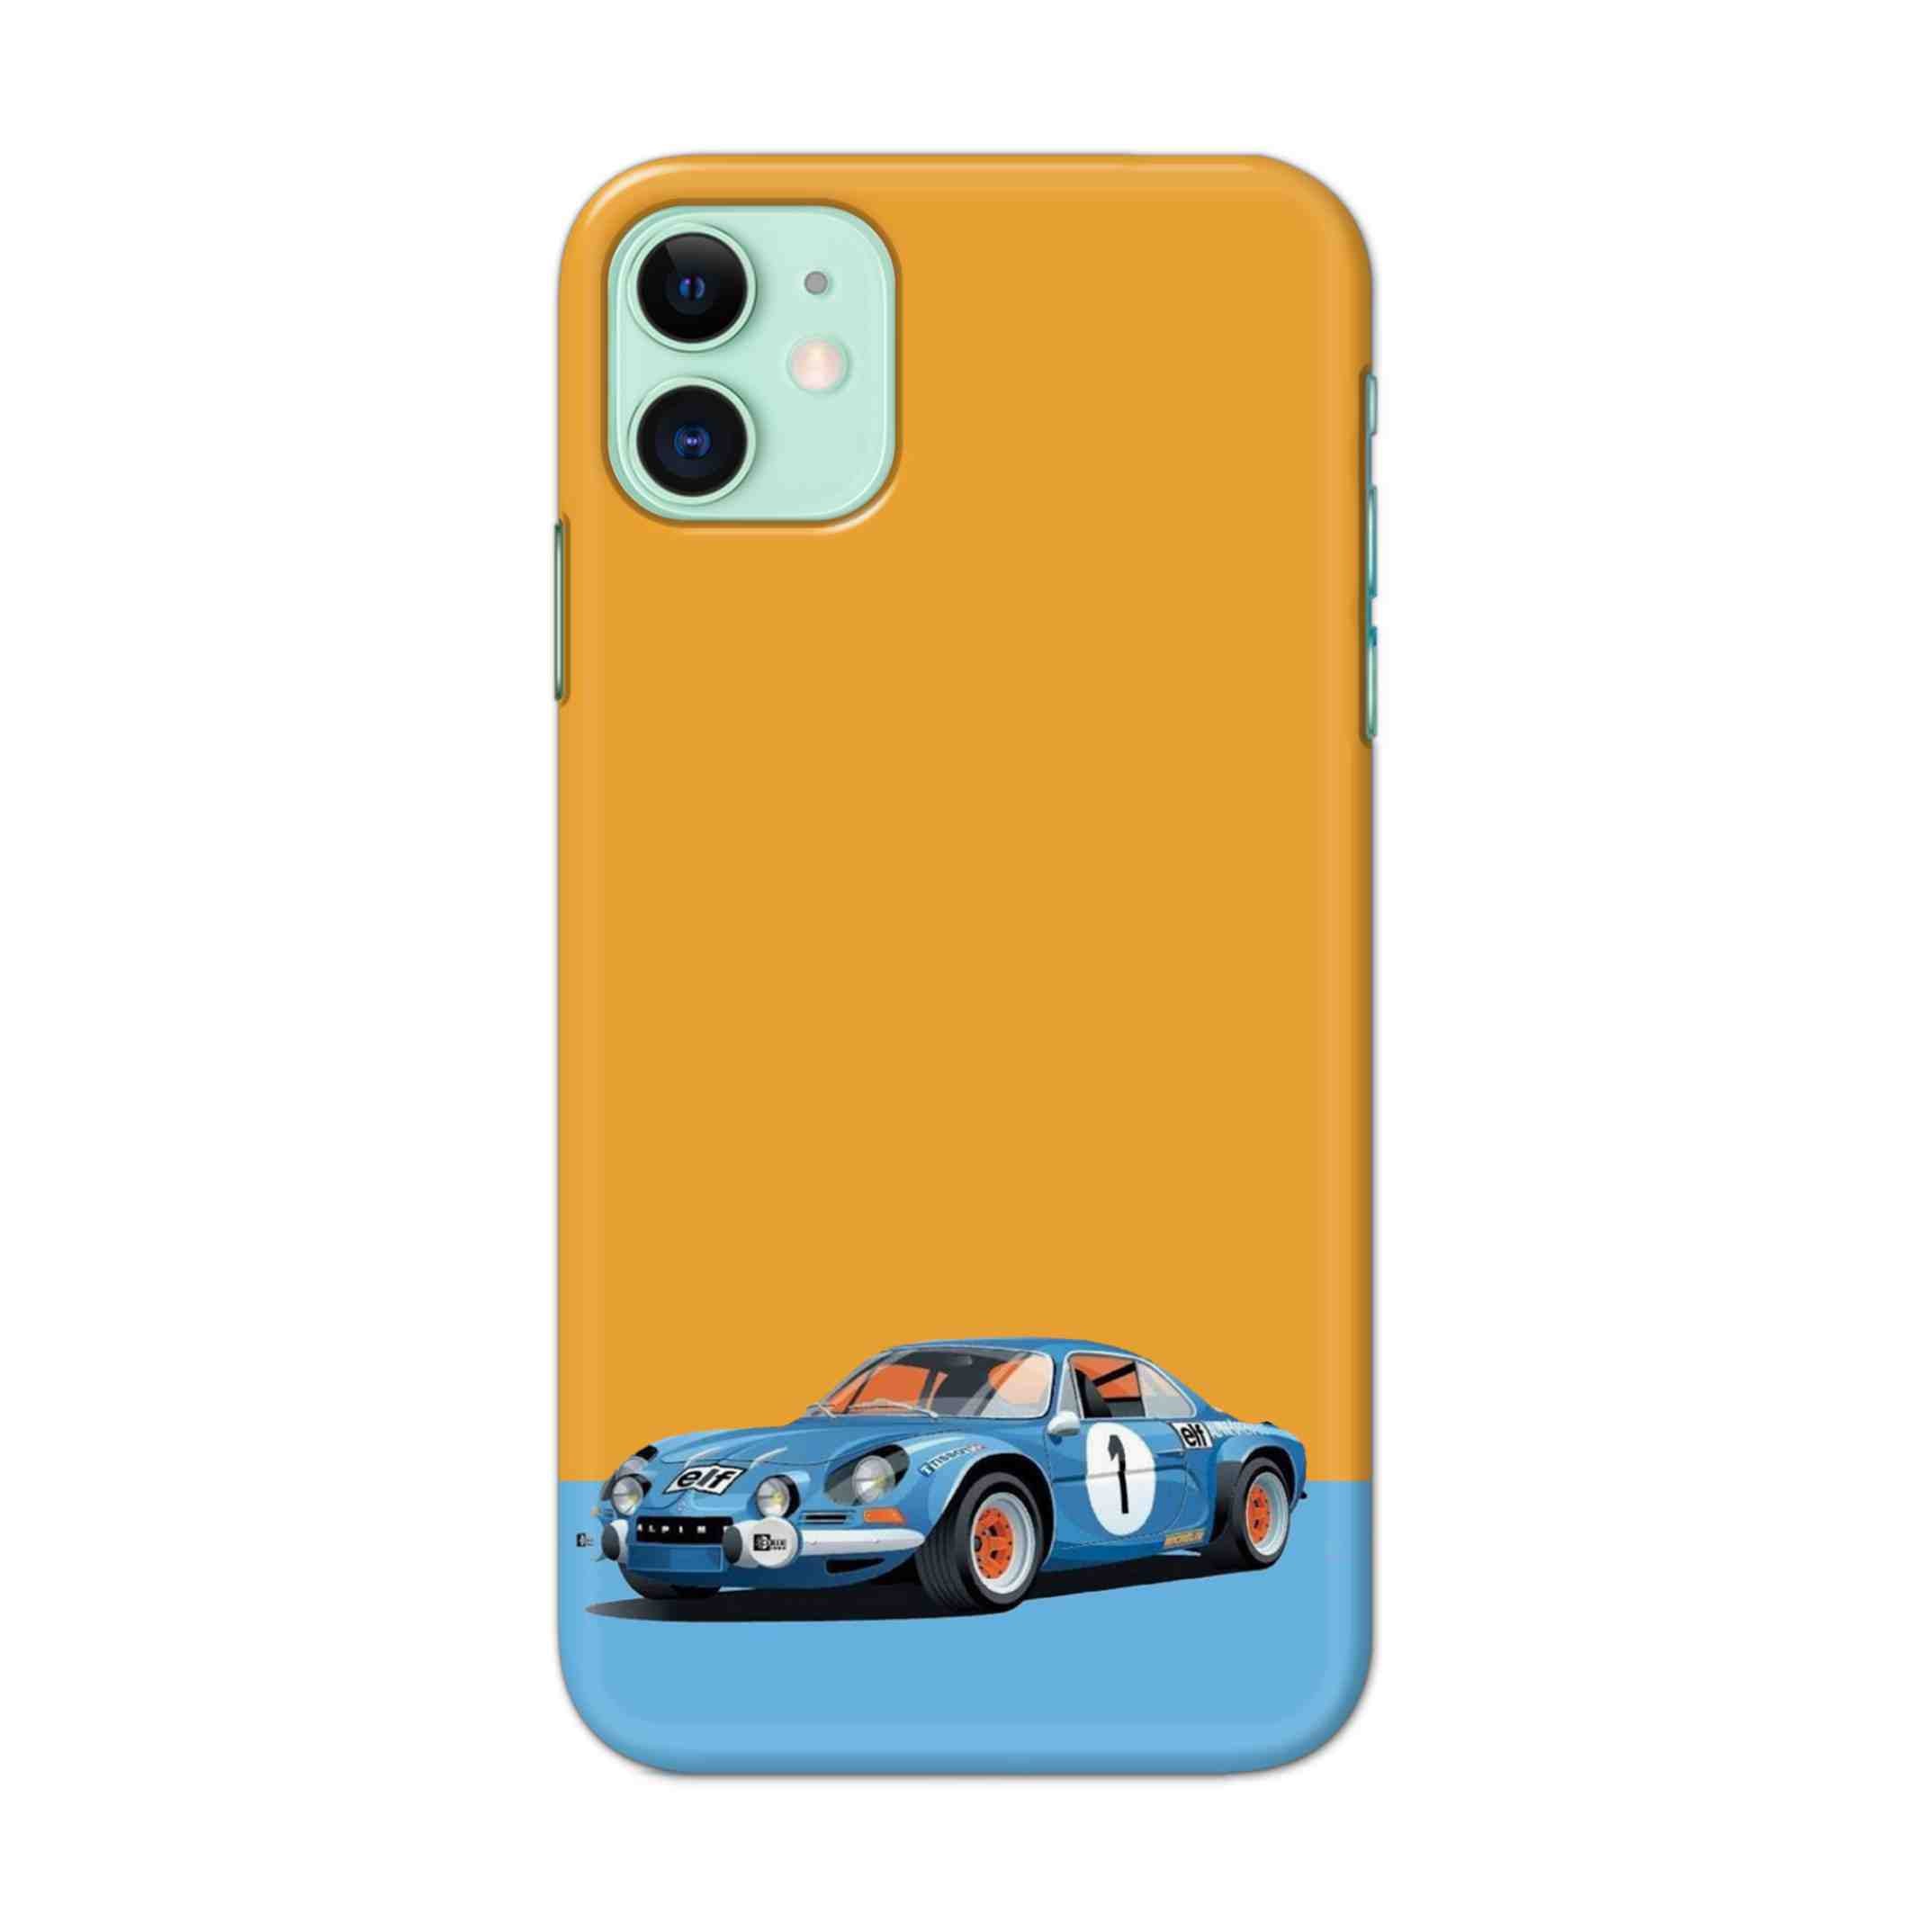 Buy Ferrari F1 Hard Back Mobile Phone Case/Cover For iPhone 11 Online